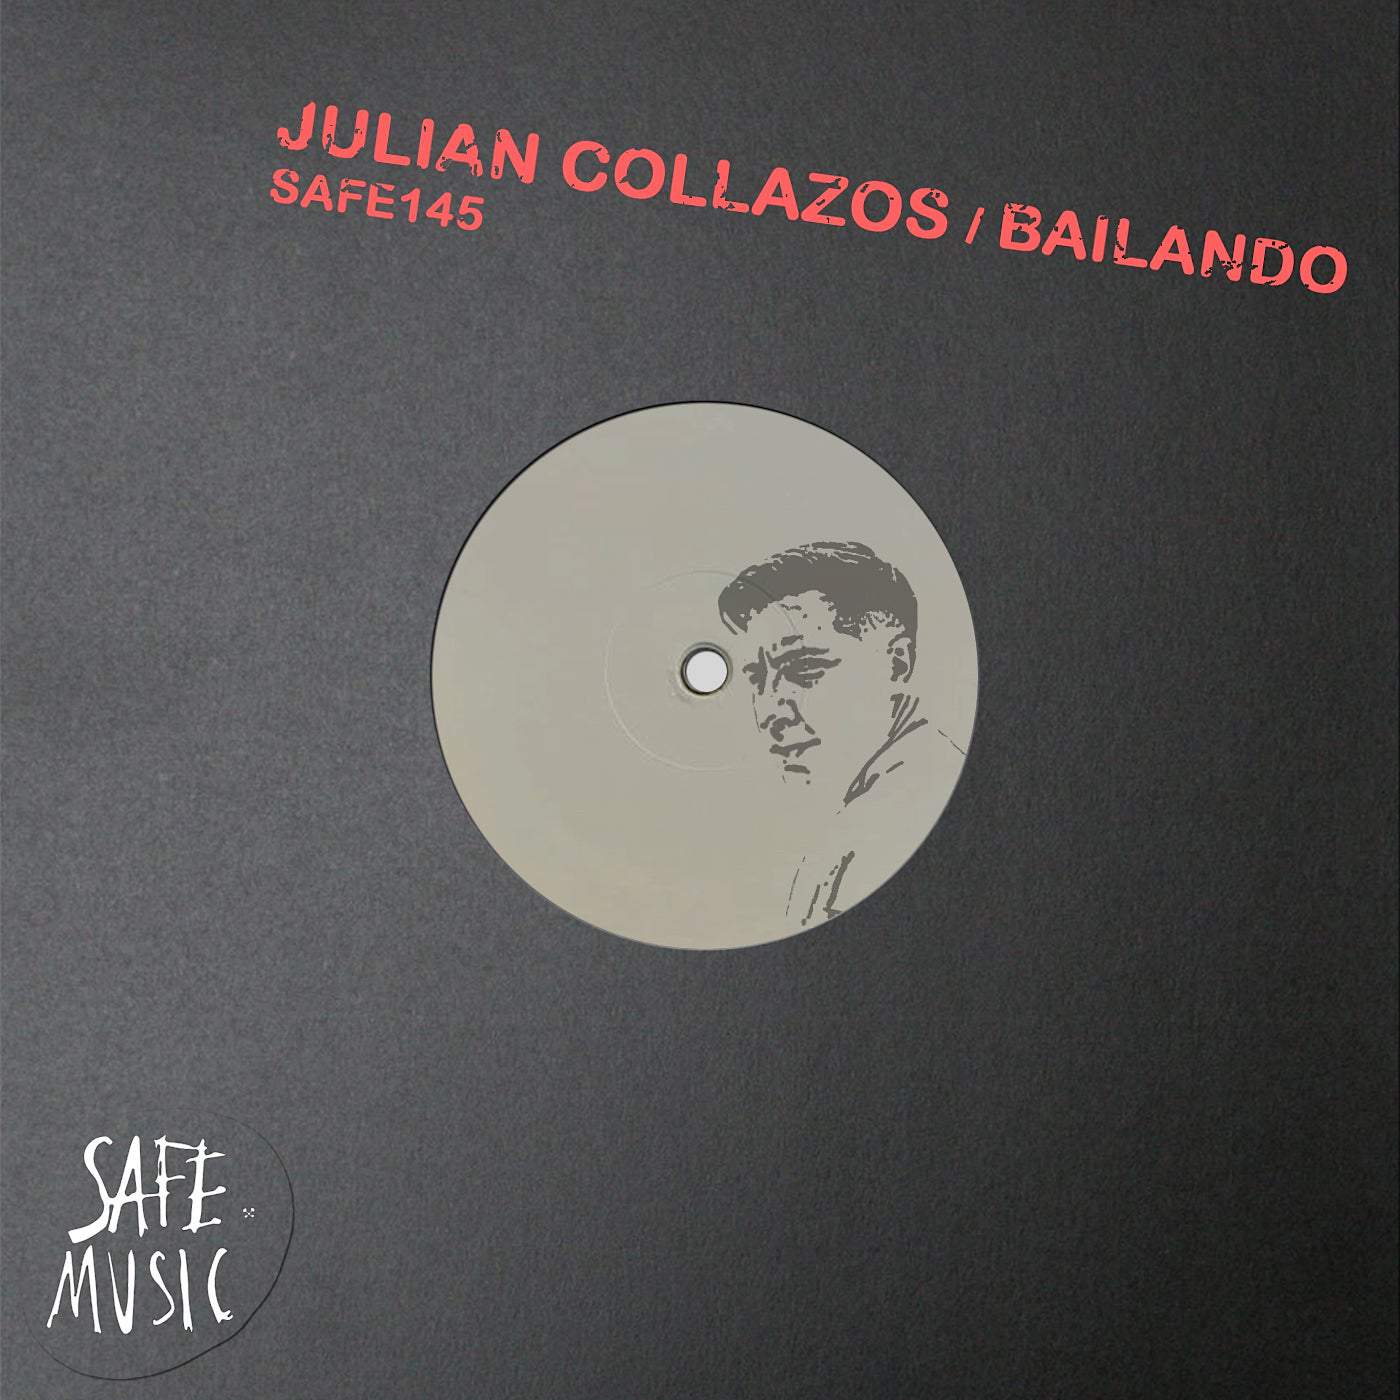 Download Bailando EP on Electrobuzz